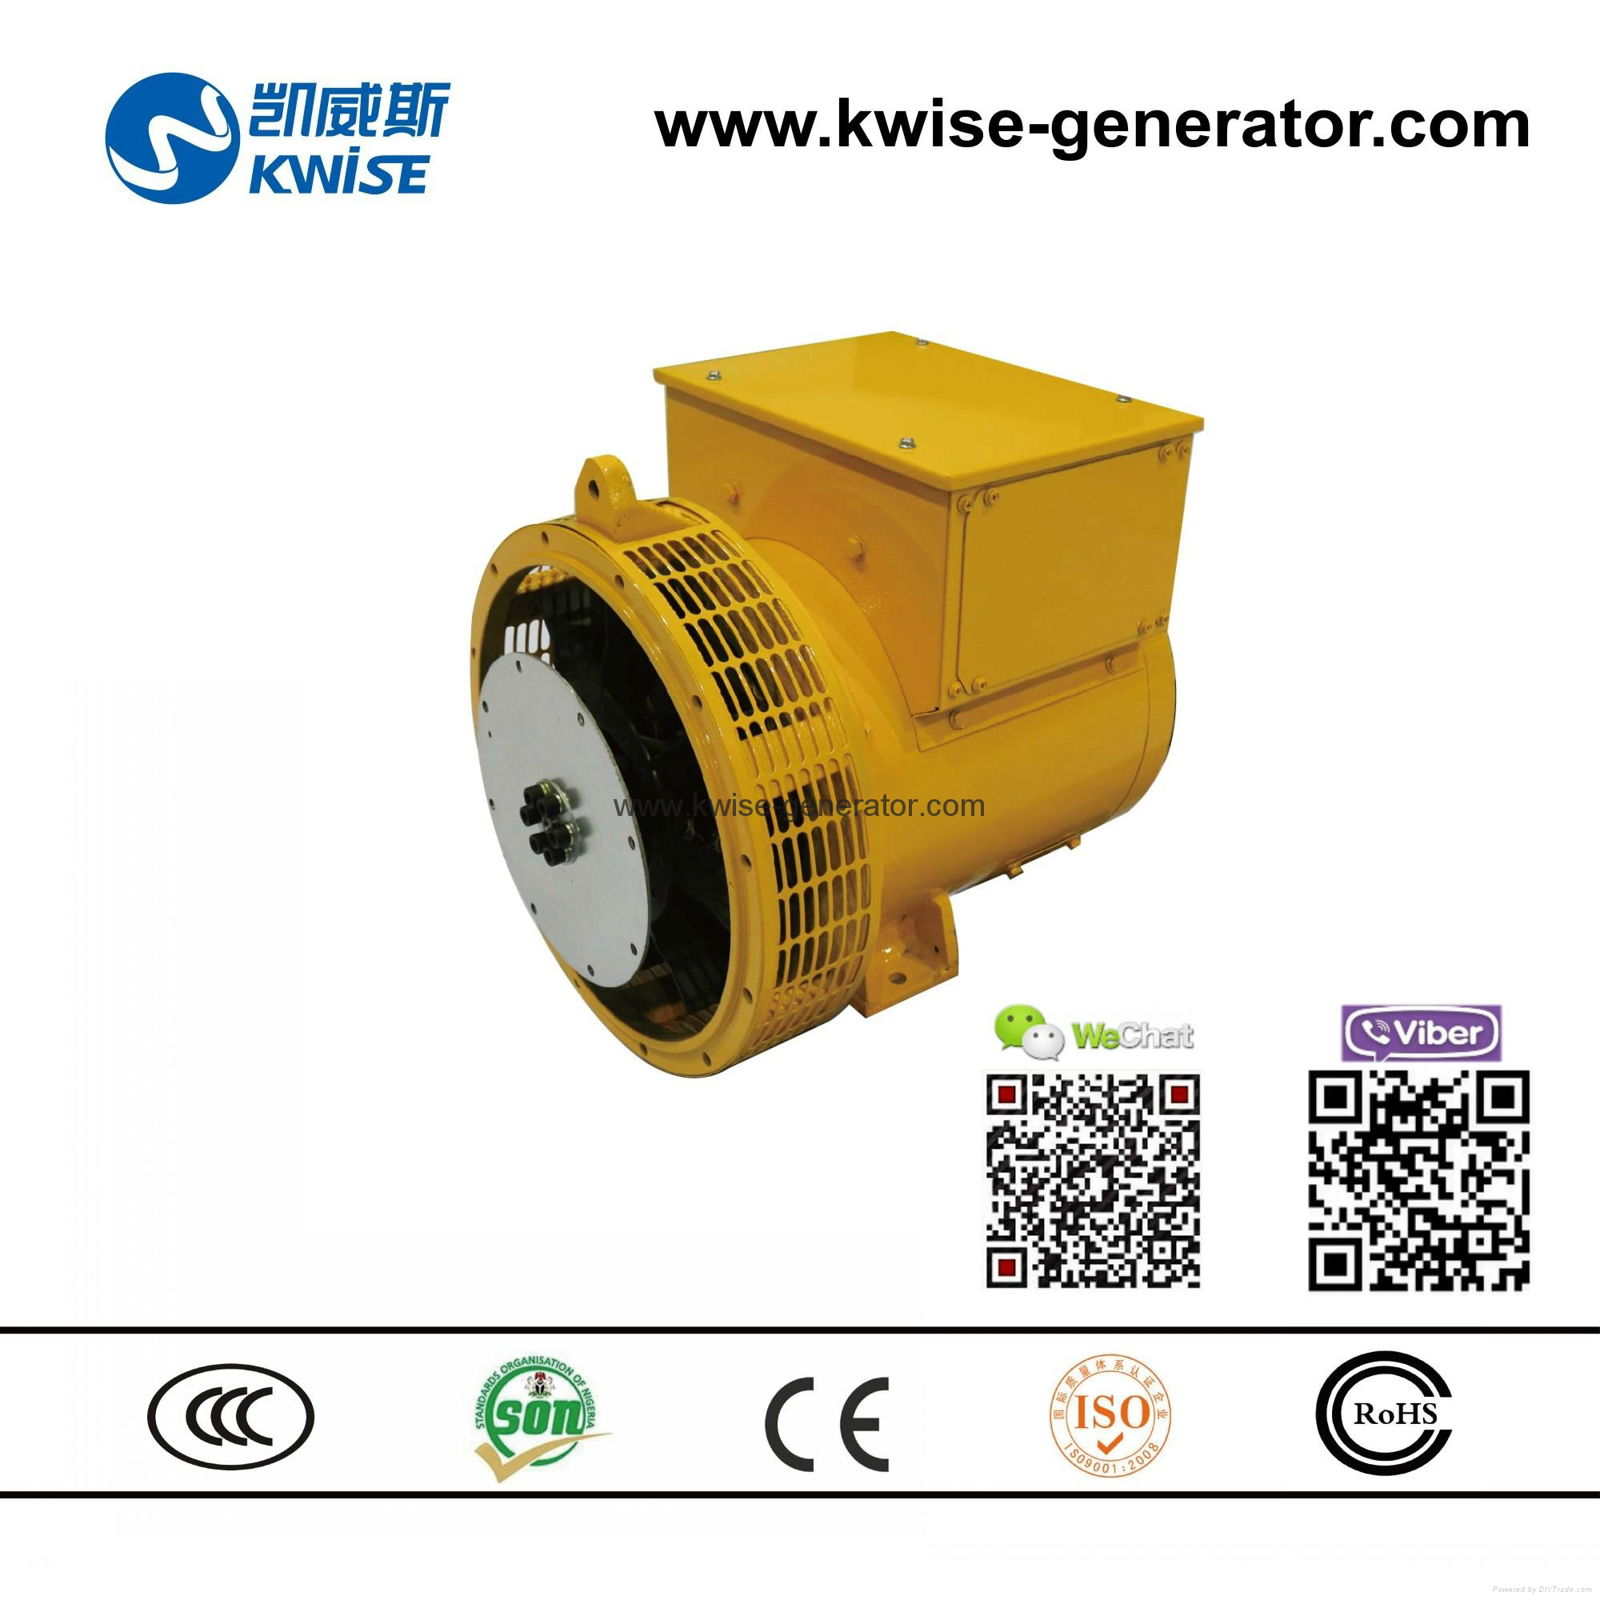 16kw Fujian Kwise Brushless Generator 2